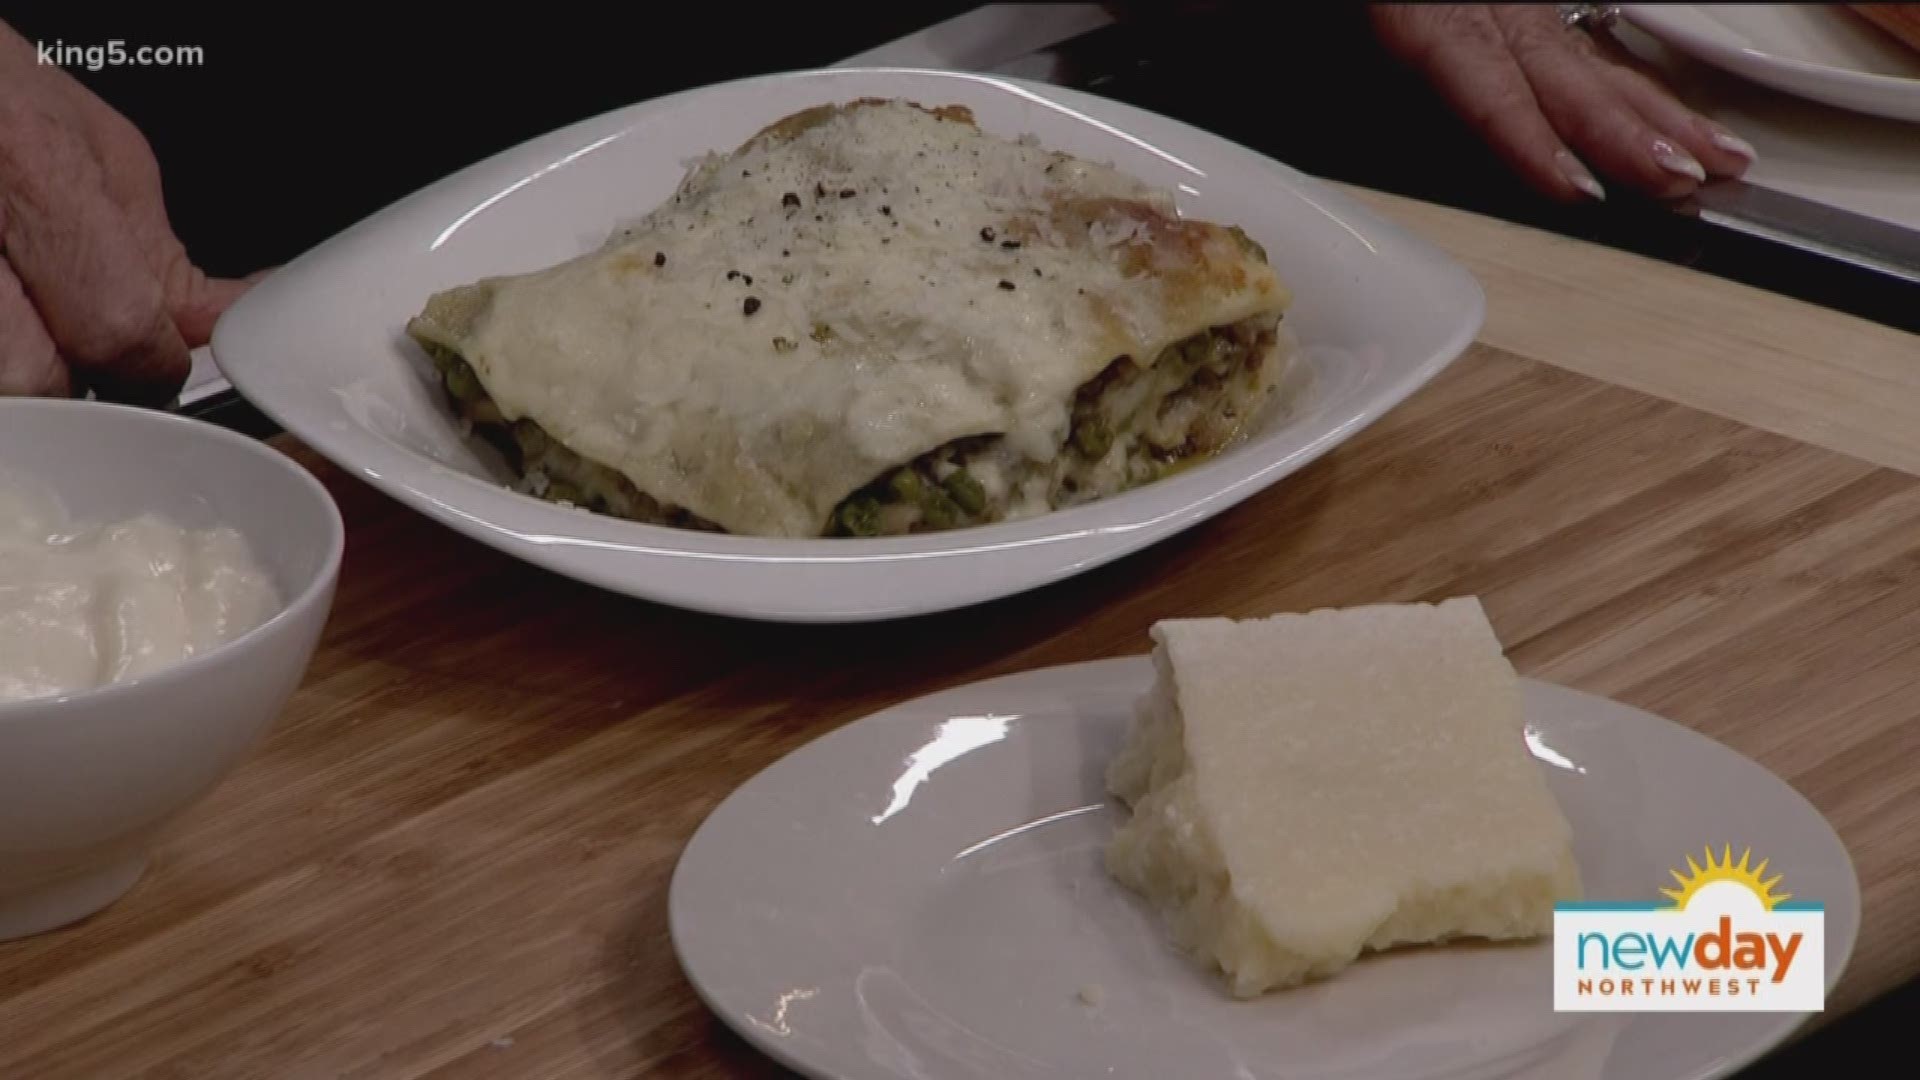 Owner of Pasta Casalinga Michela Tartaglia will show us how to make her famous lasagna.